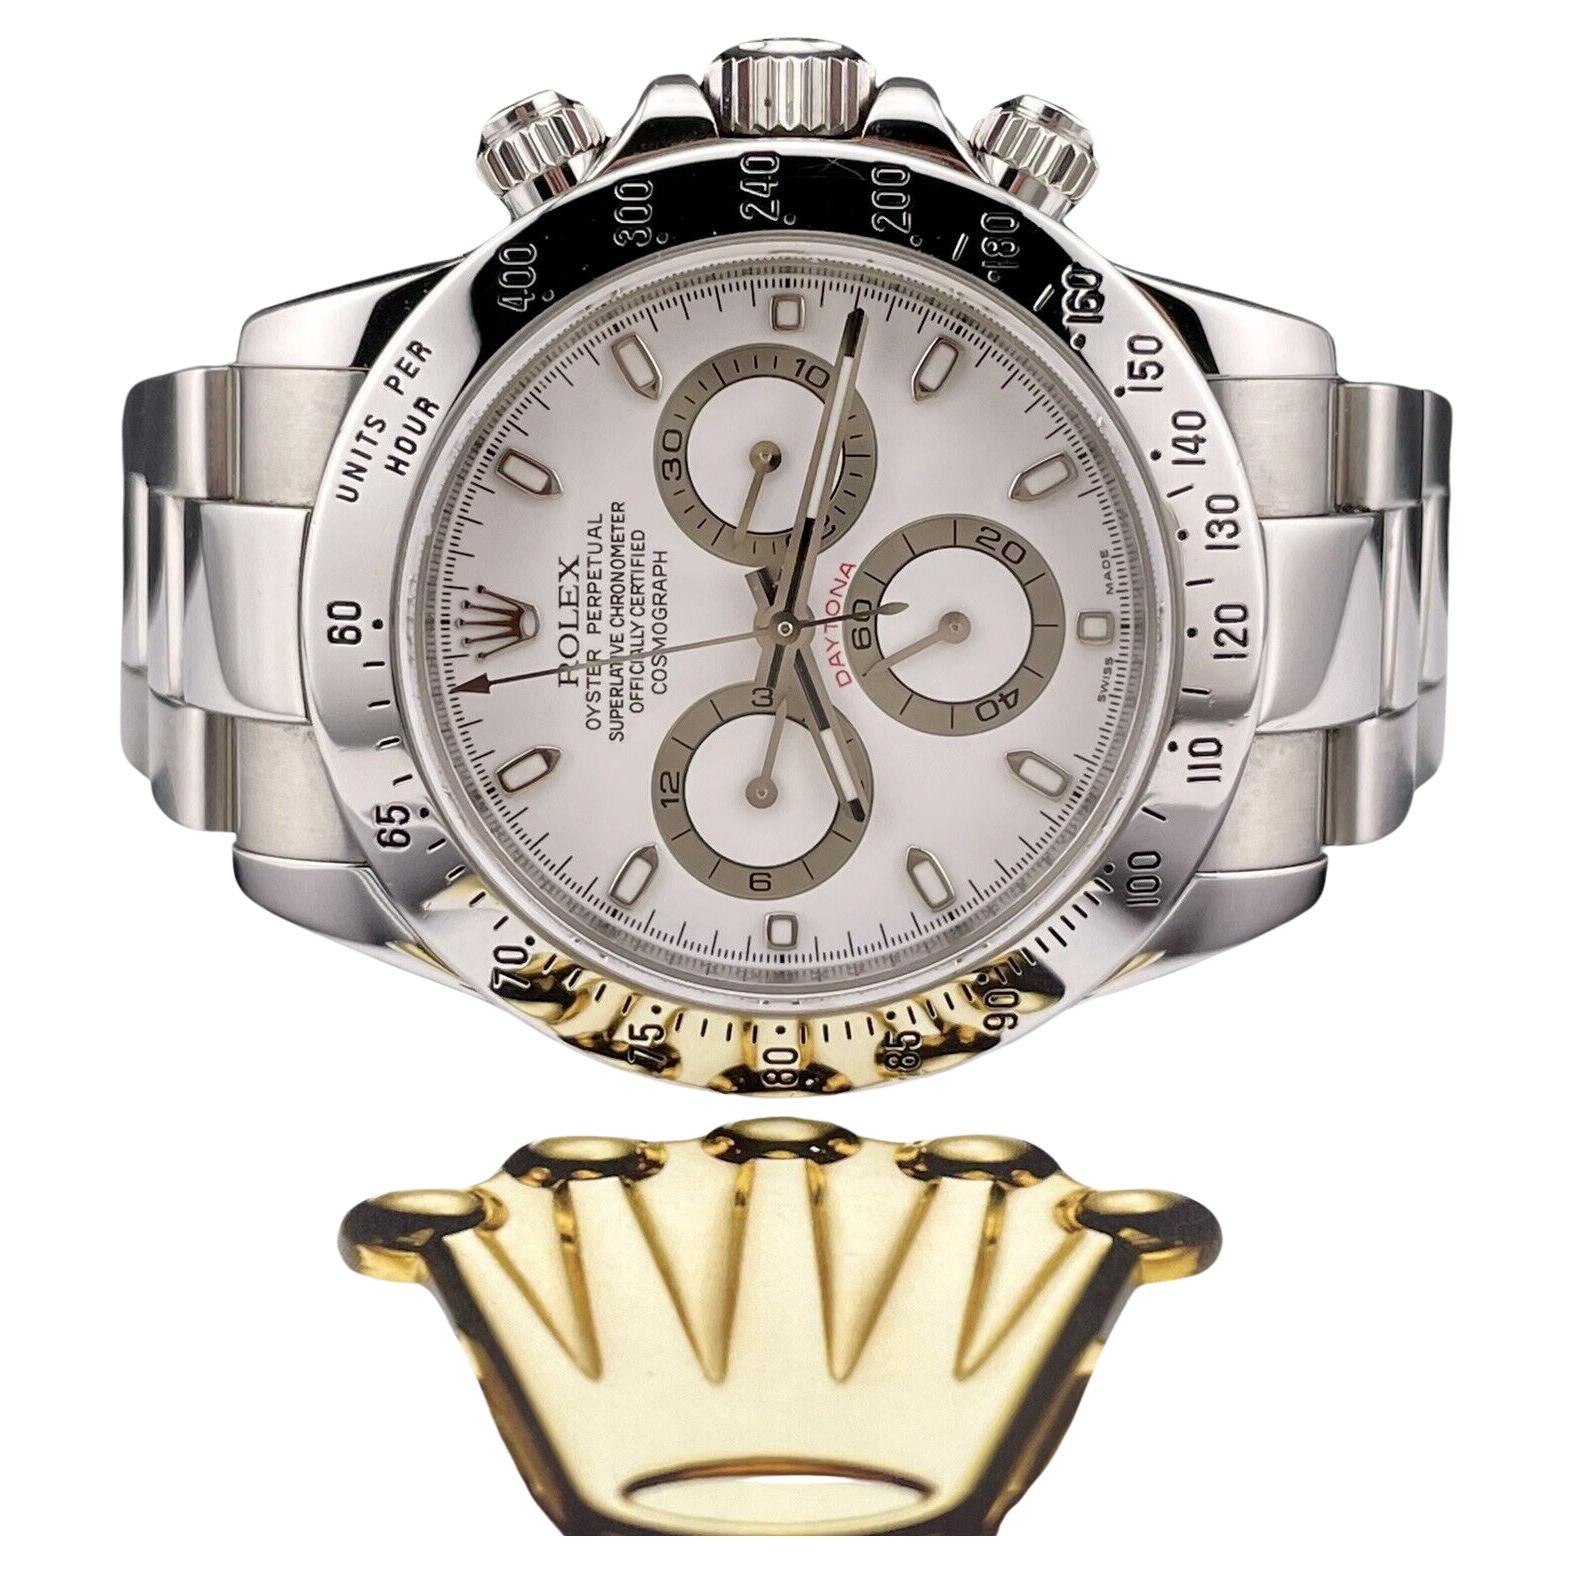 Rolex Daytona Cosmograph 40mm Men's Oyster White Dial Chrono Steel Watch 116520